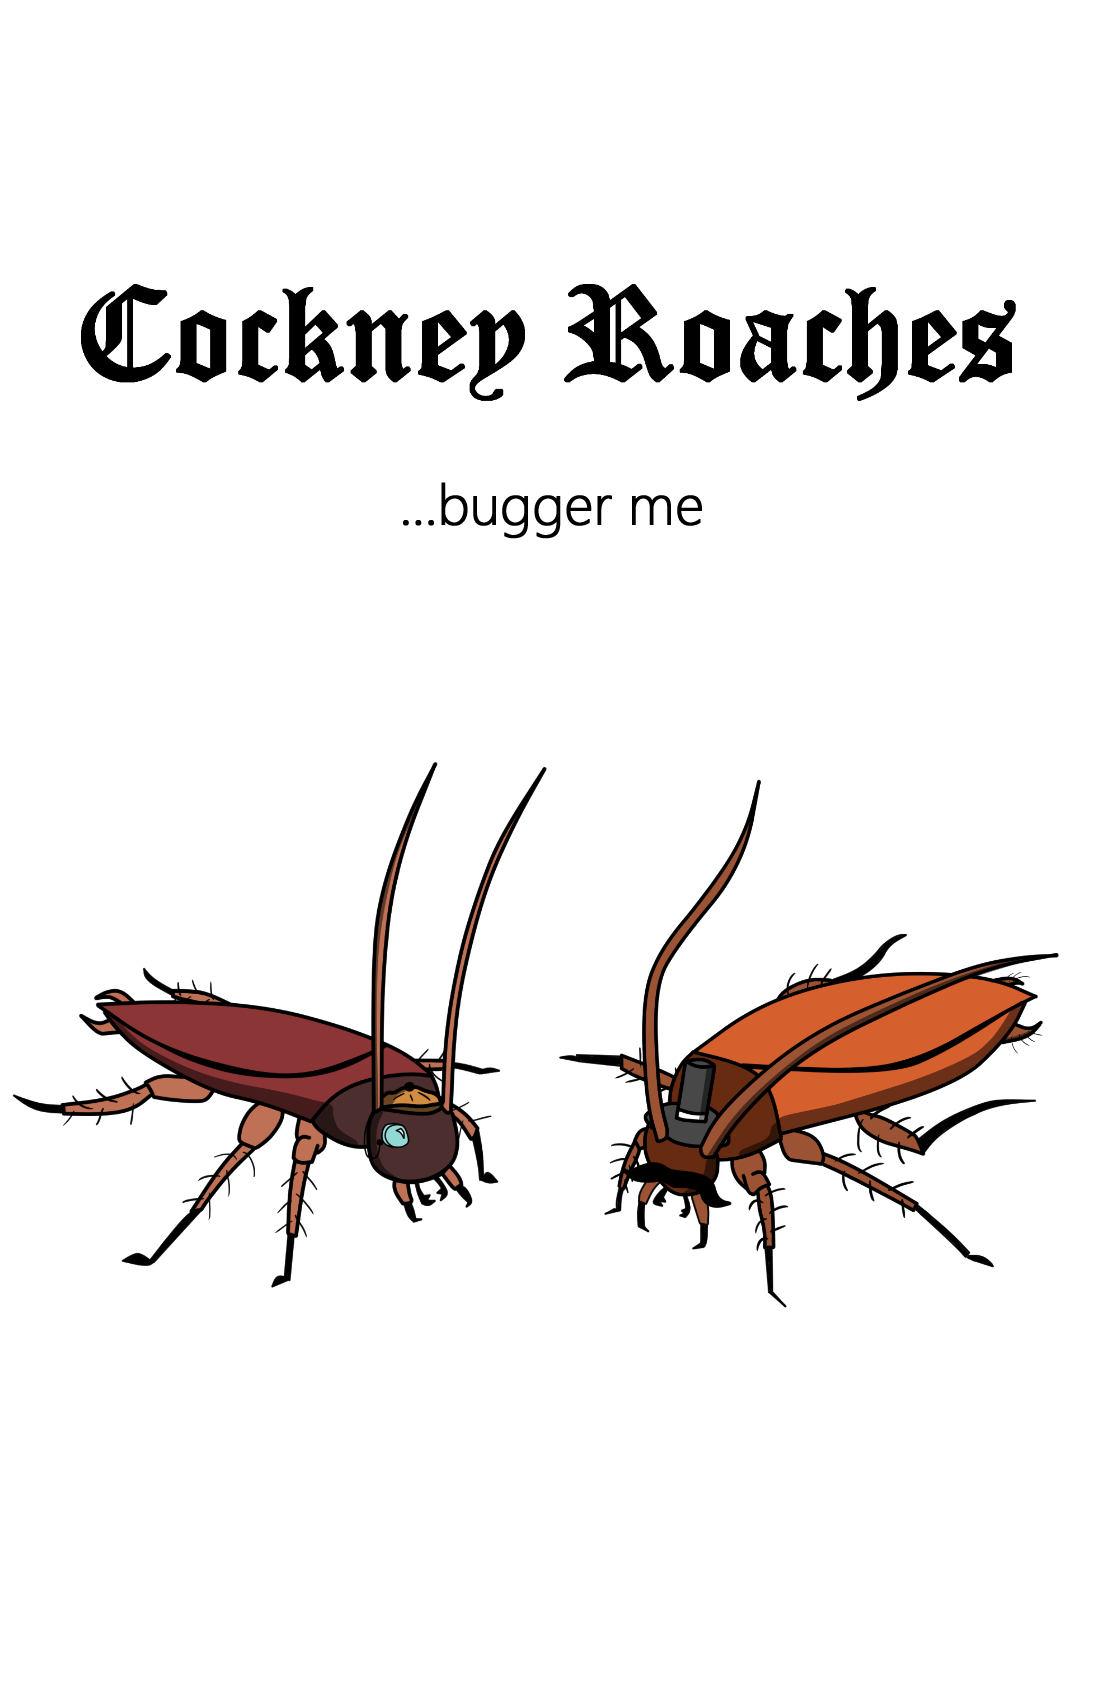 Cockney Roaches